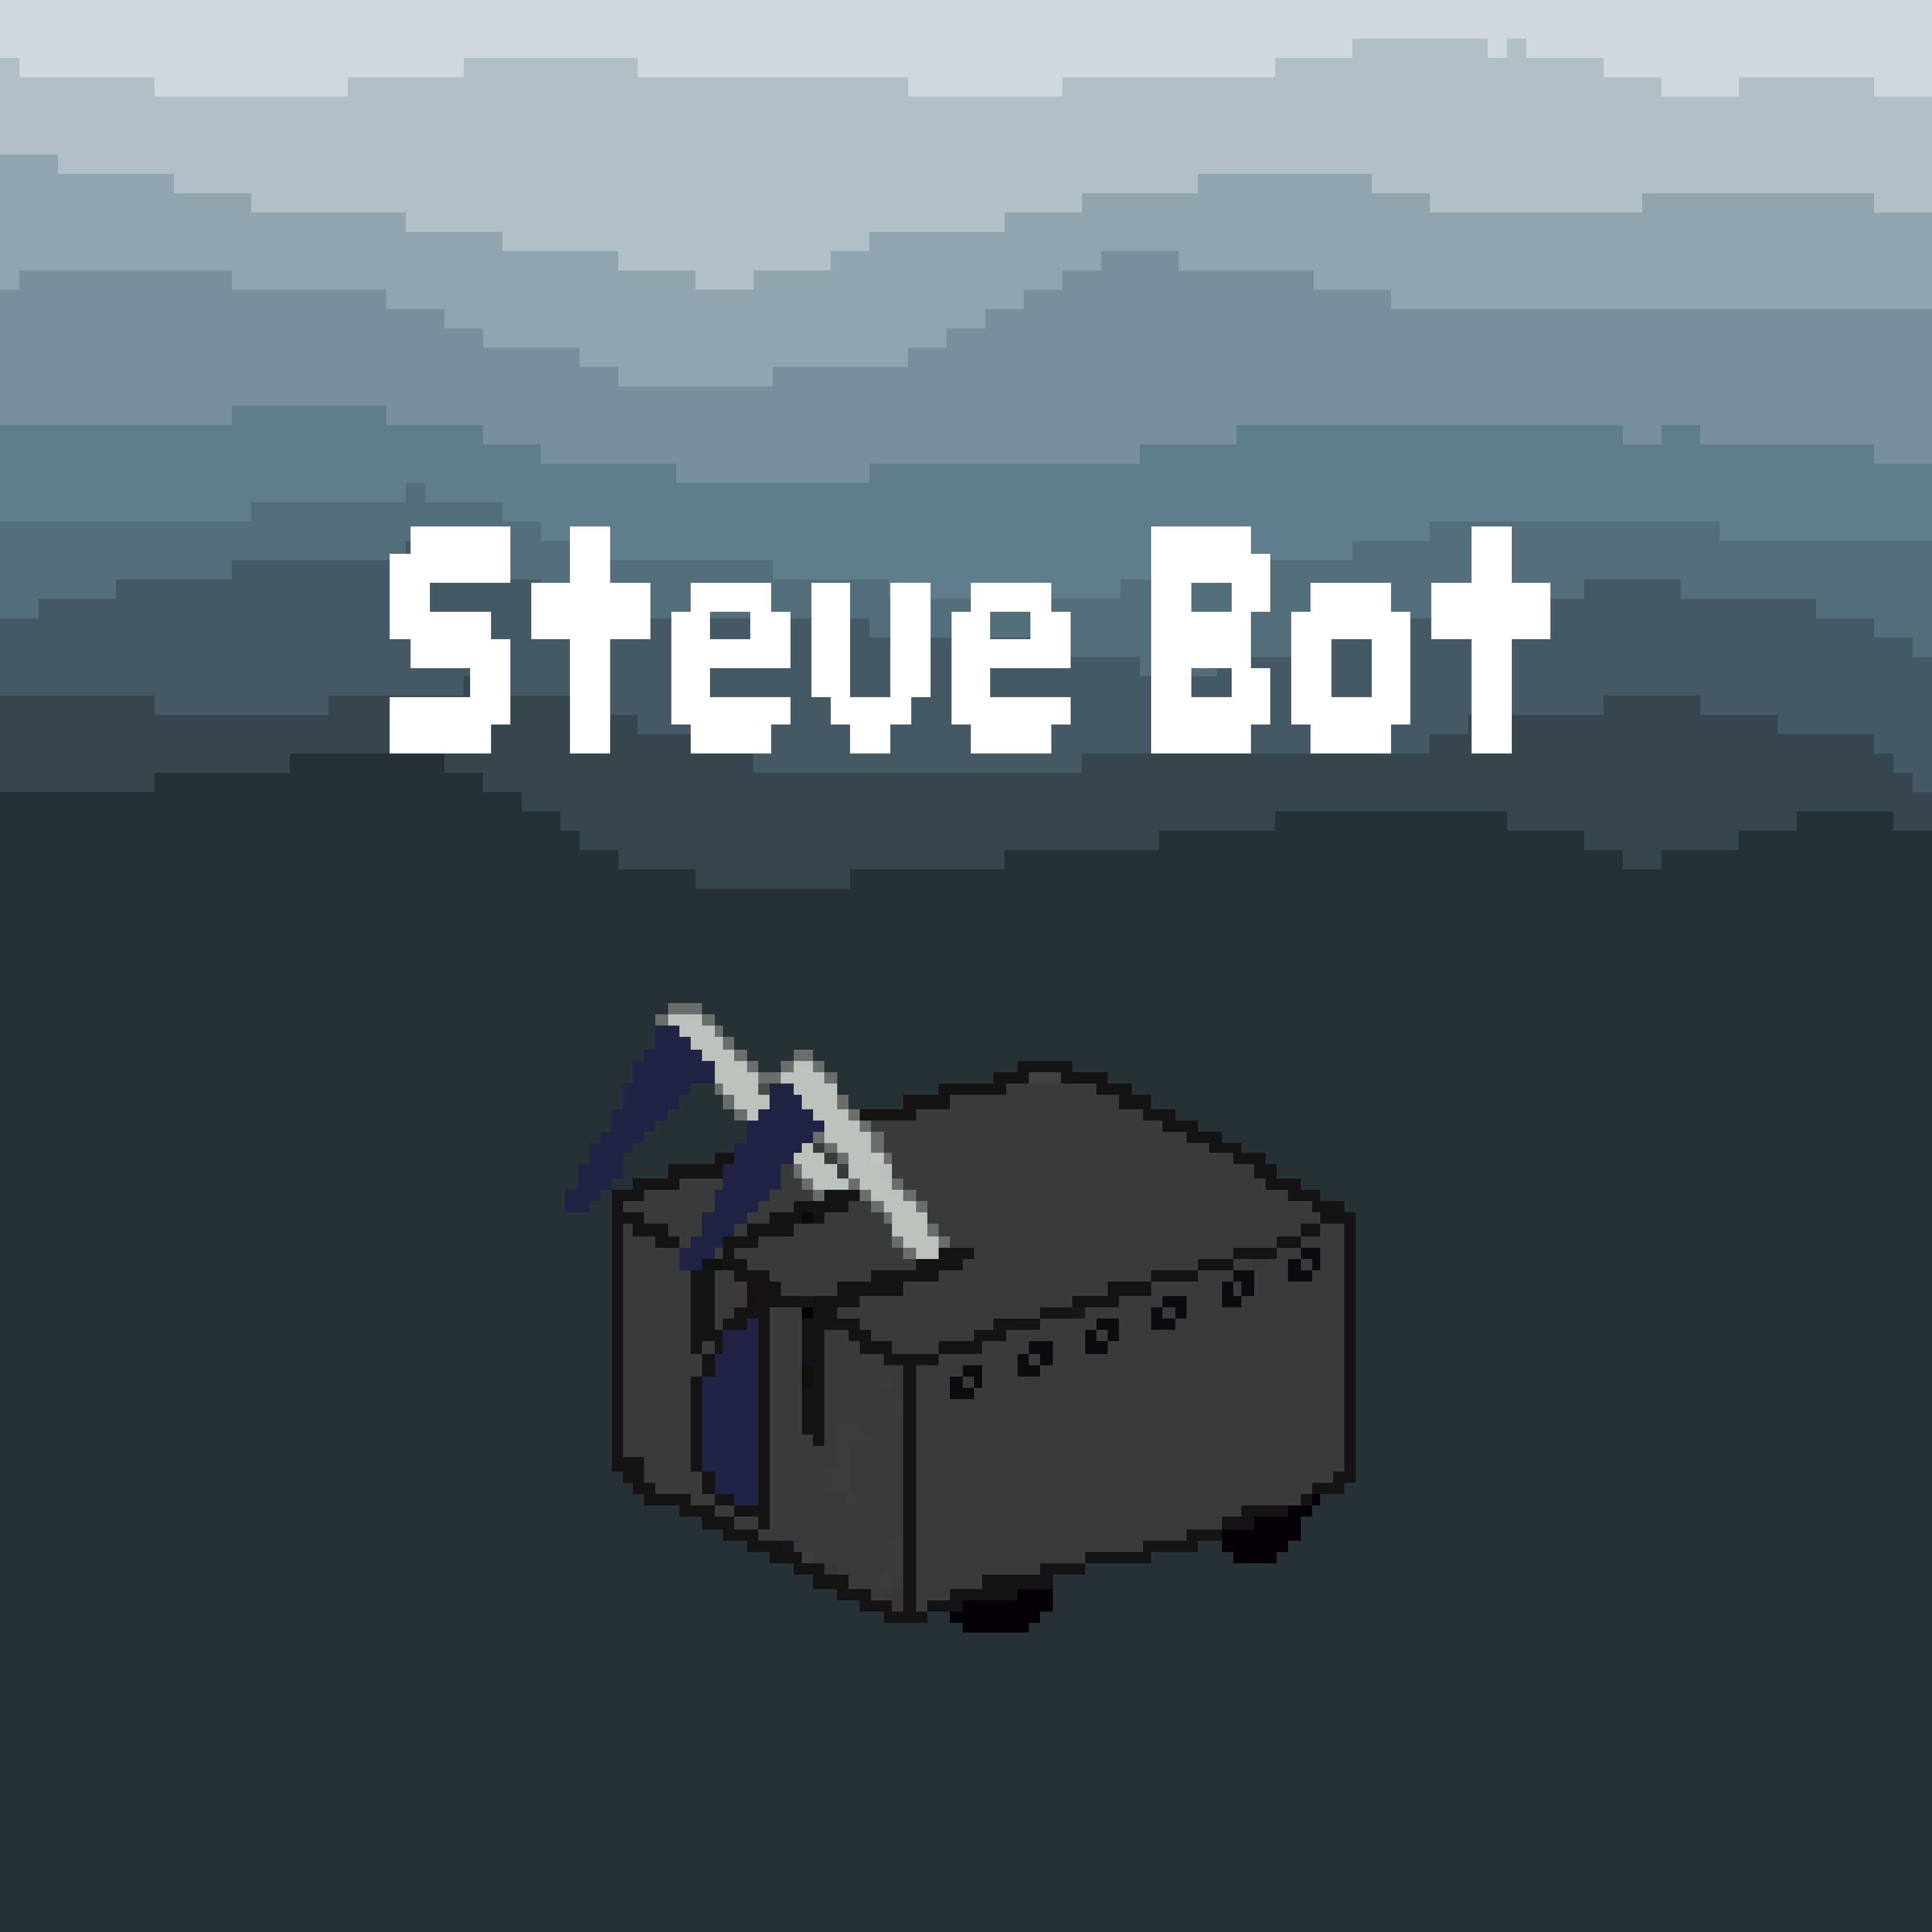 Steve pixel art